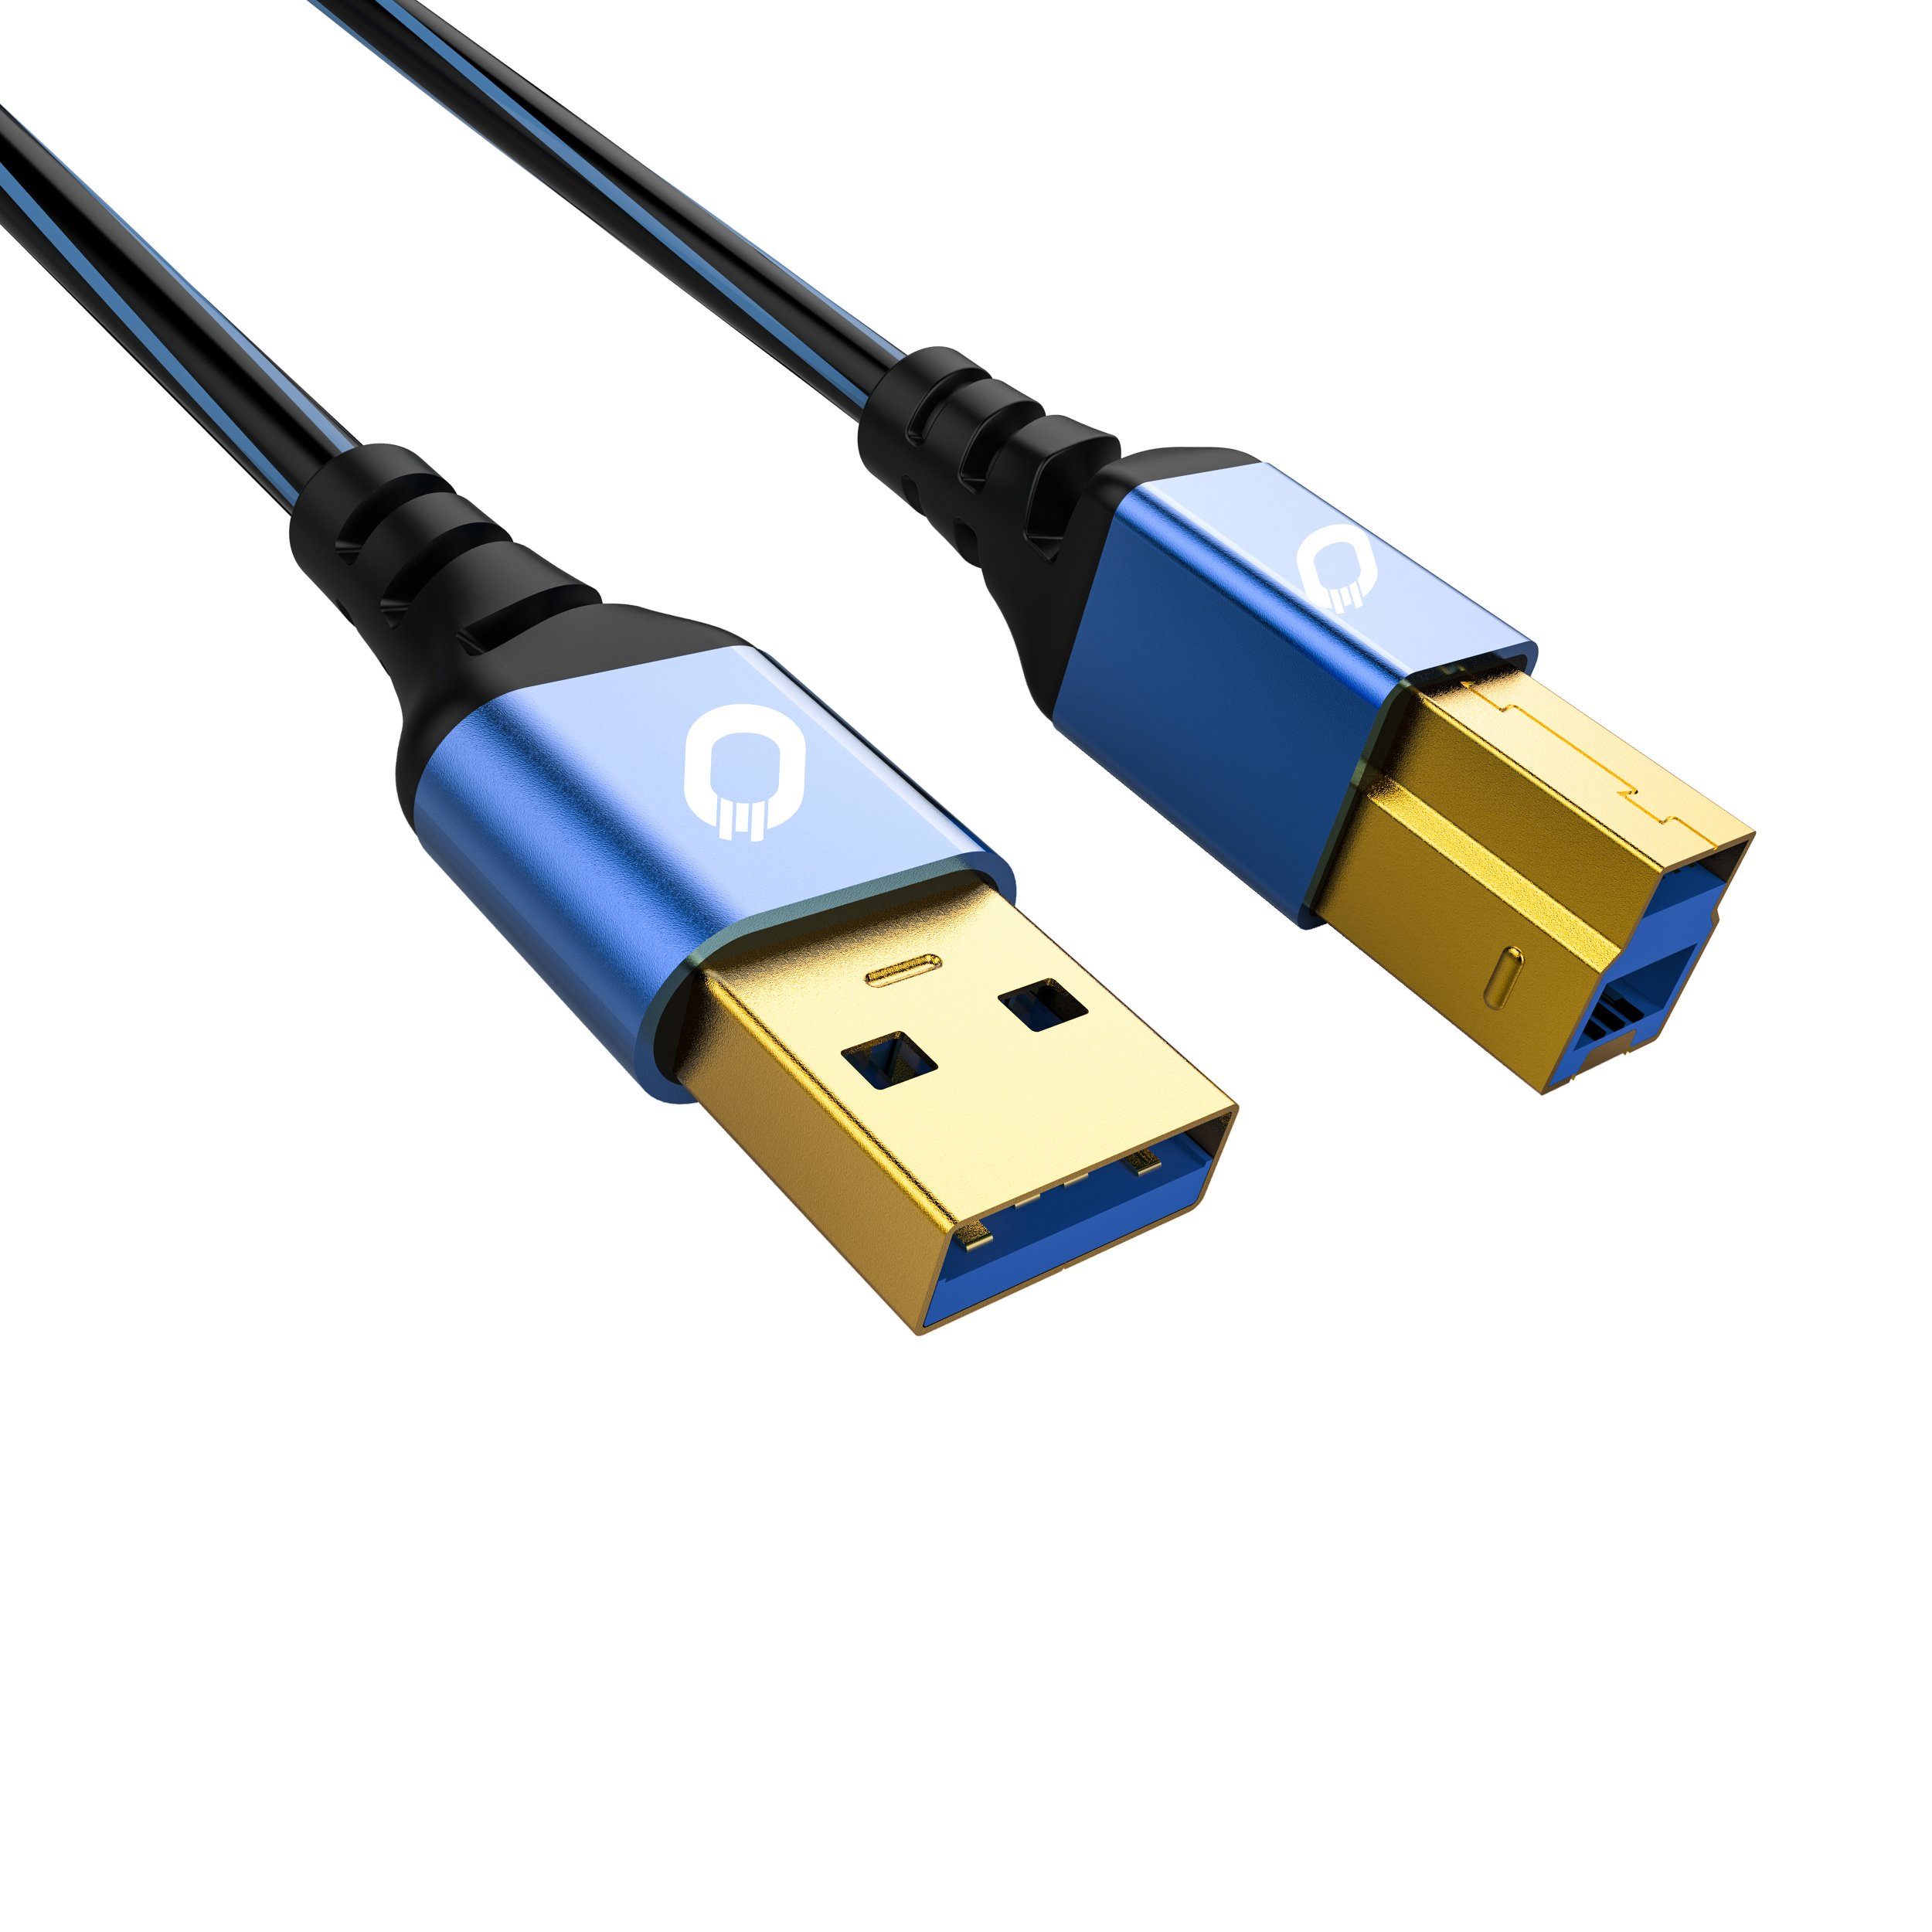 Oehlbach »USB Plus B3 - USB 3.0 - Kabel für Drucker, externe Festplatte -  Typ A zu Typ B - PVC-Mantel - OFC, blau/schwarz - 50cm« USB-Kabel, (50 cm)  online kaufen | OTTO